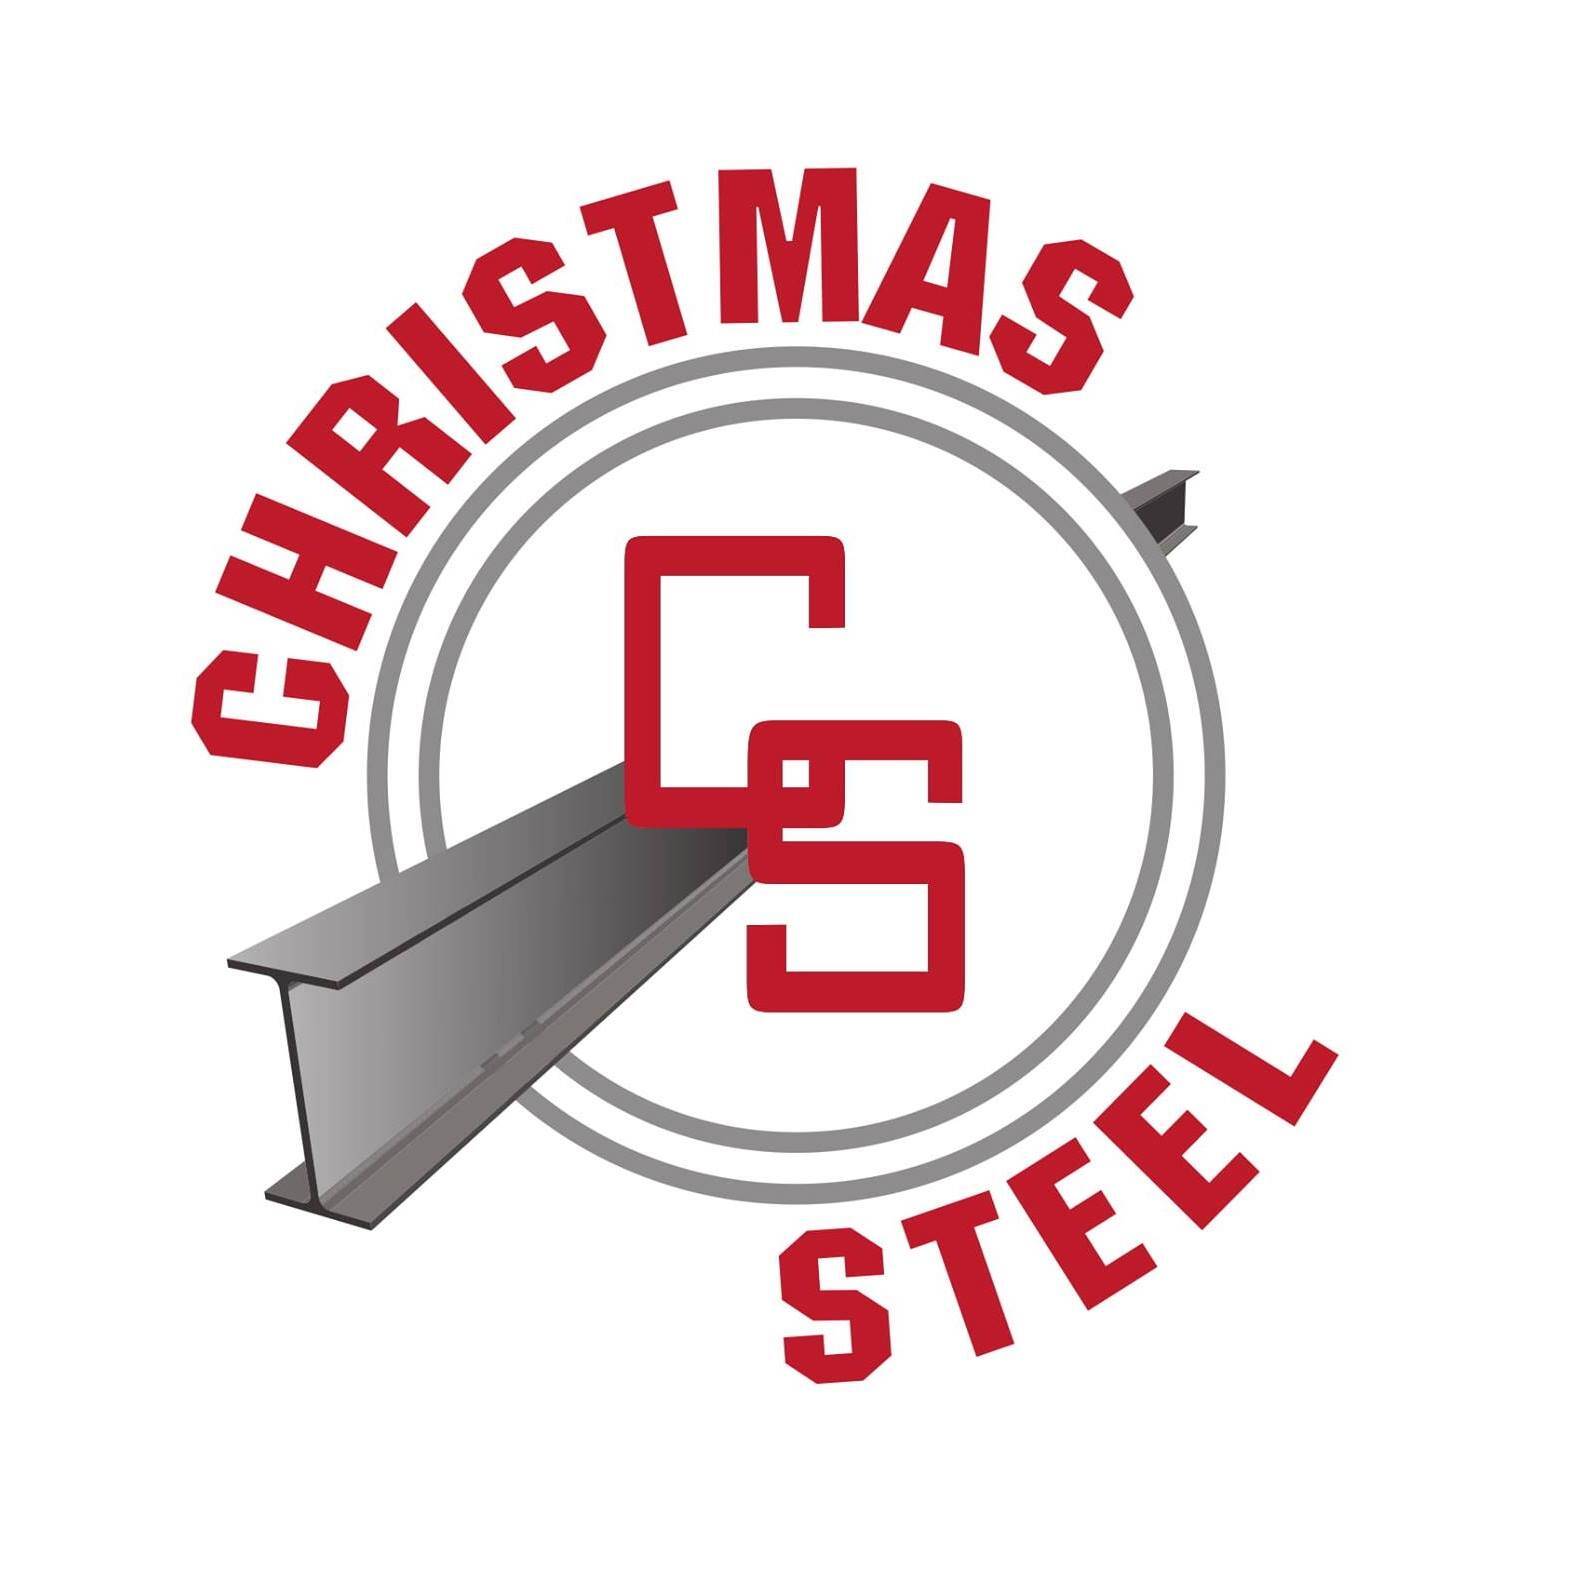 Christmas Steel